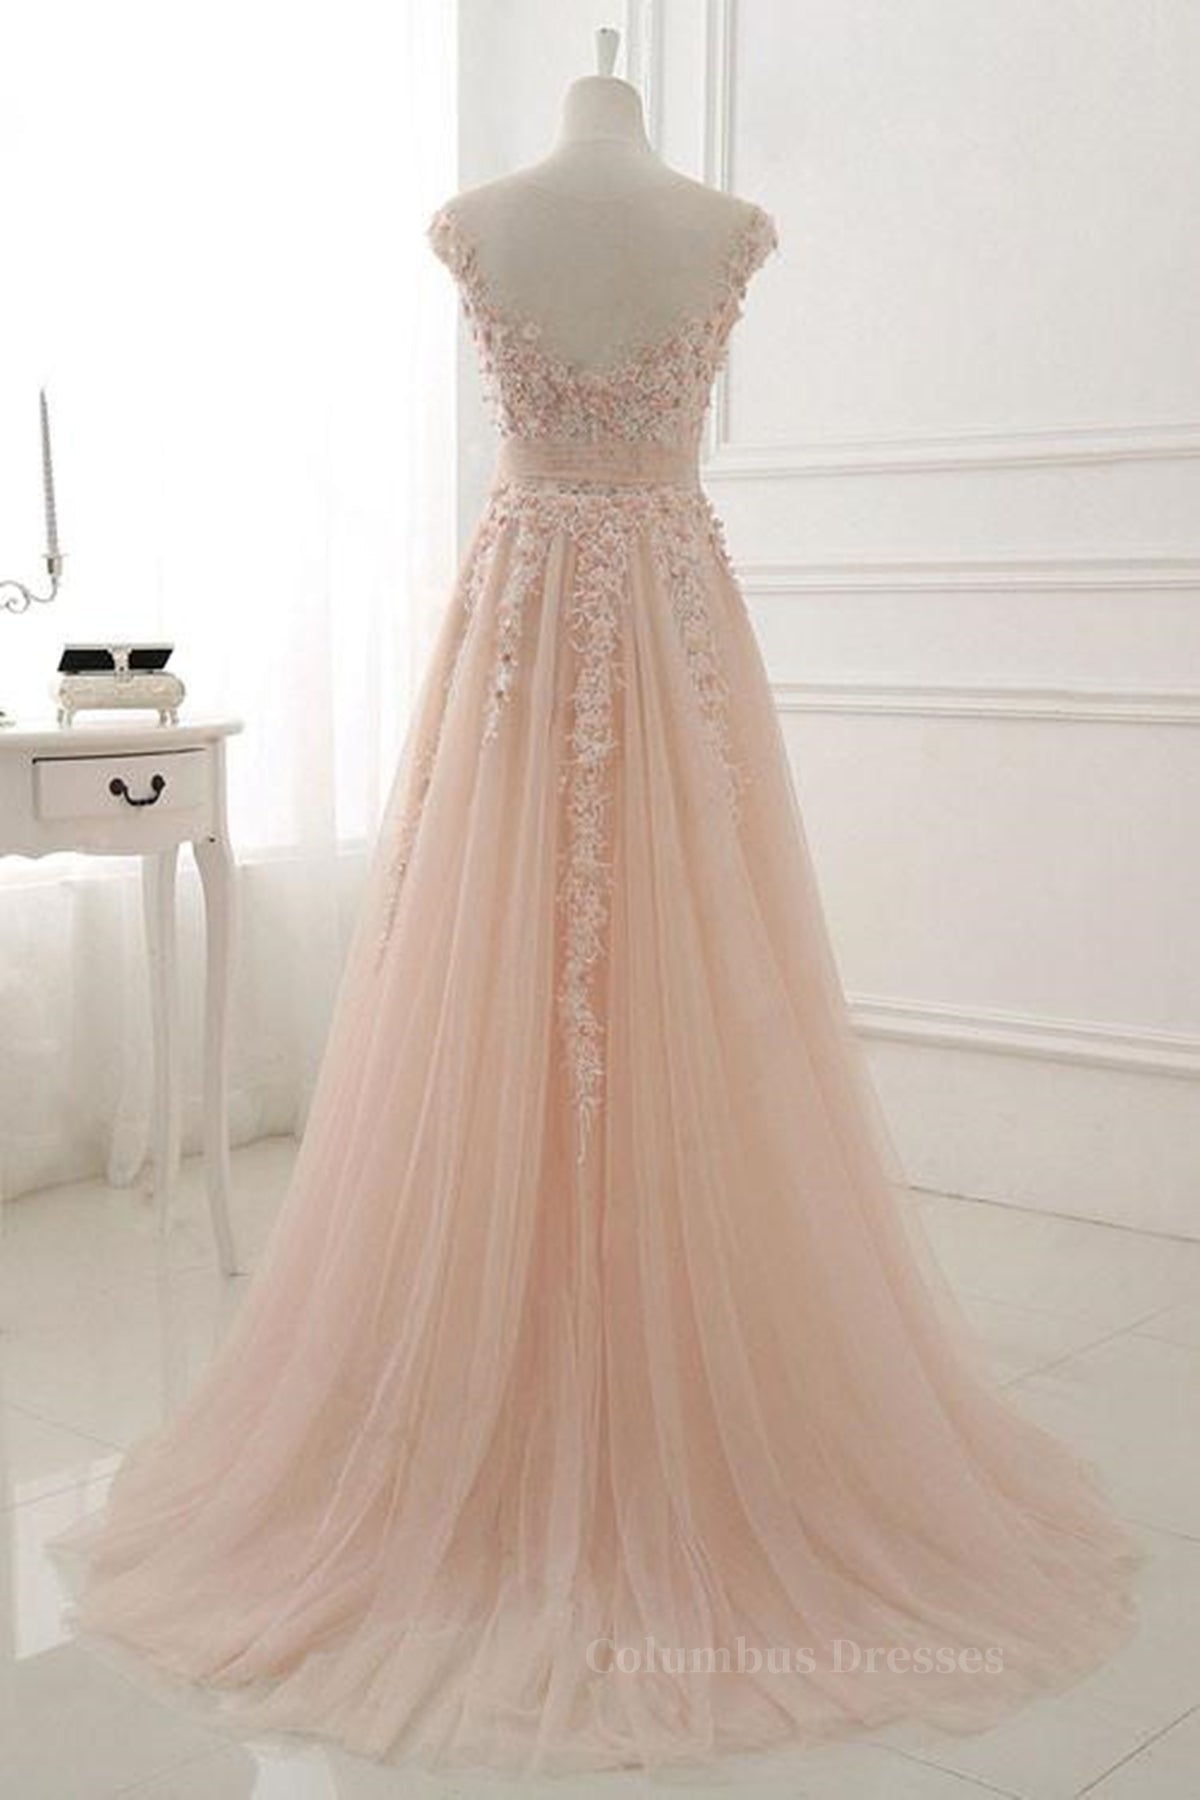 Bridesmaids Dresses Gold, Round Neck Pink Lace Prom Dresses, Pink Lace Formal Evening Dresses